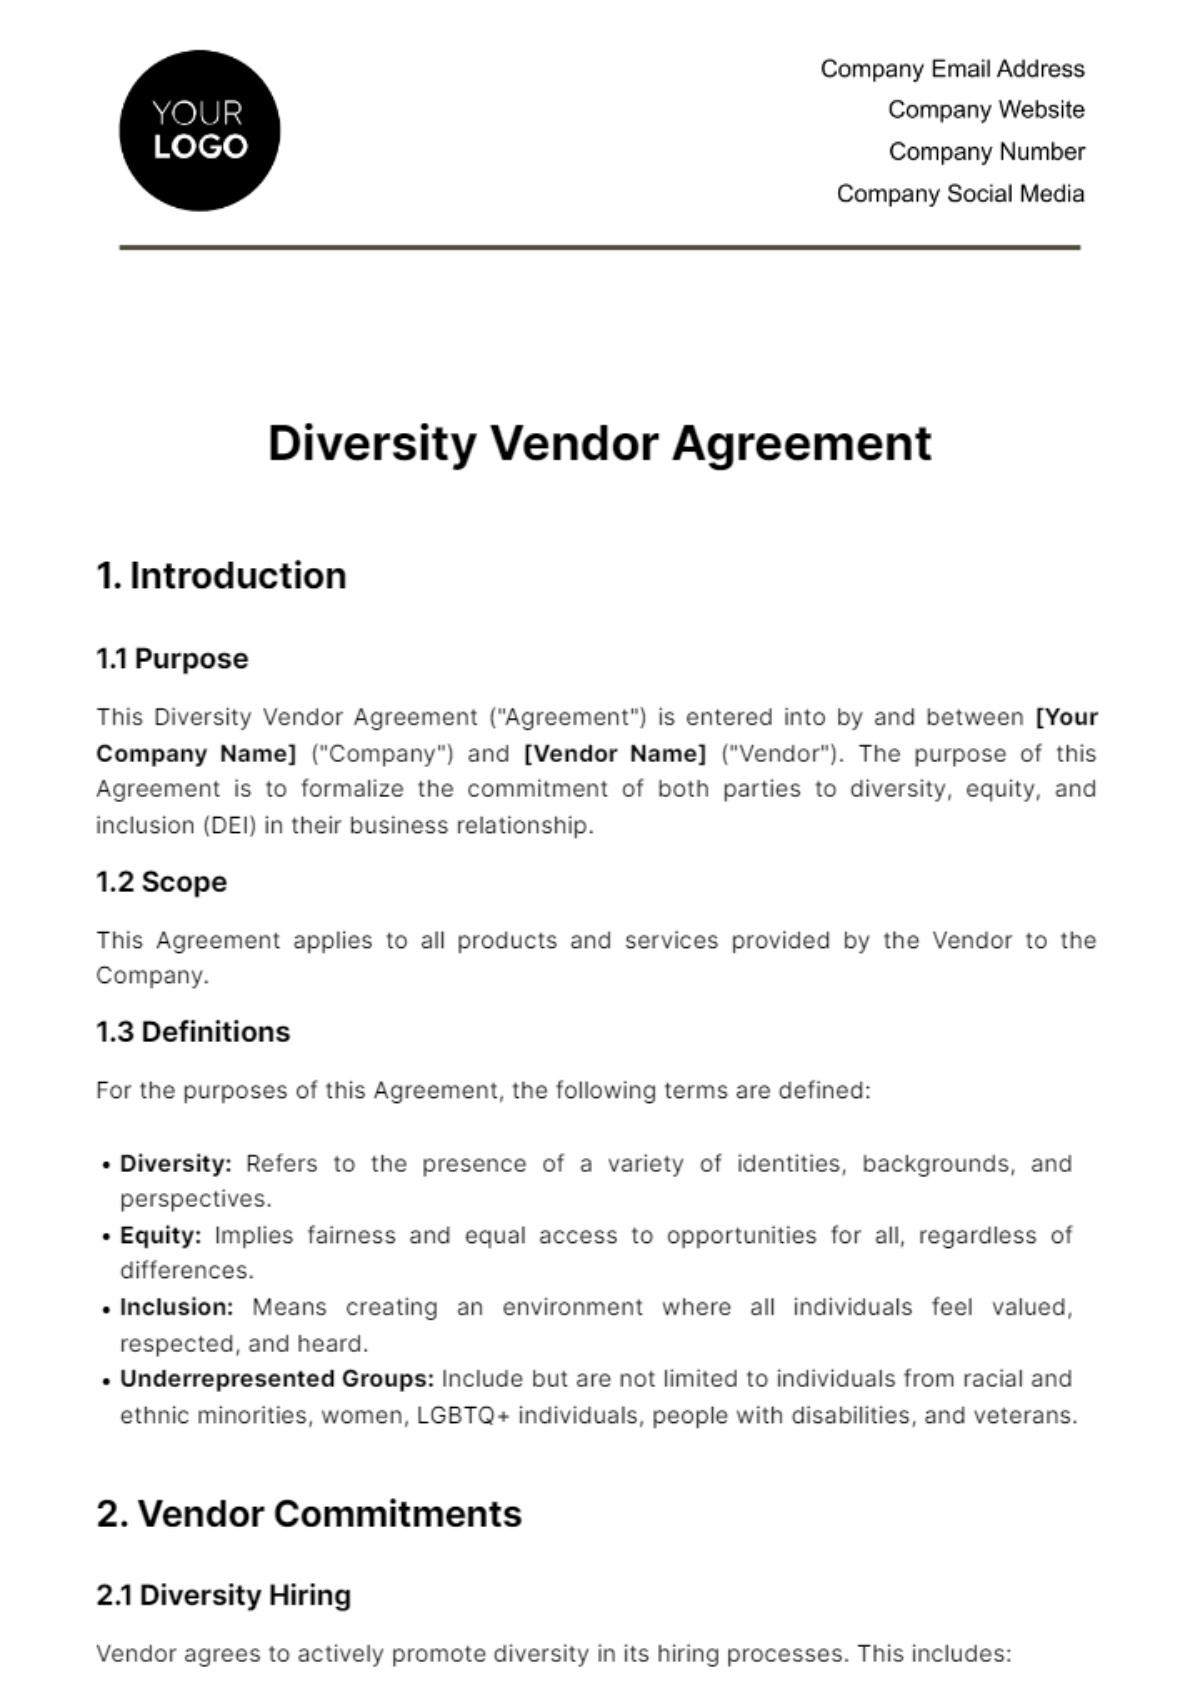 Diversity Vendor Agreement HR Template